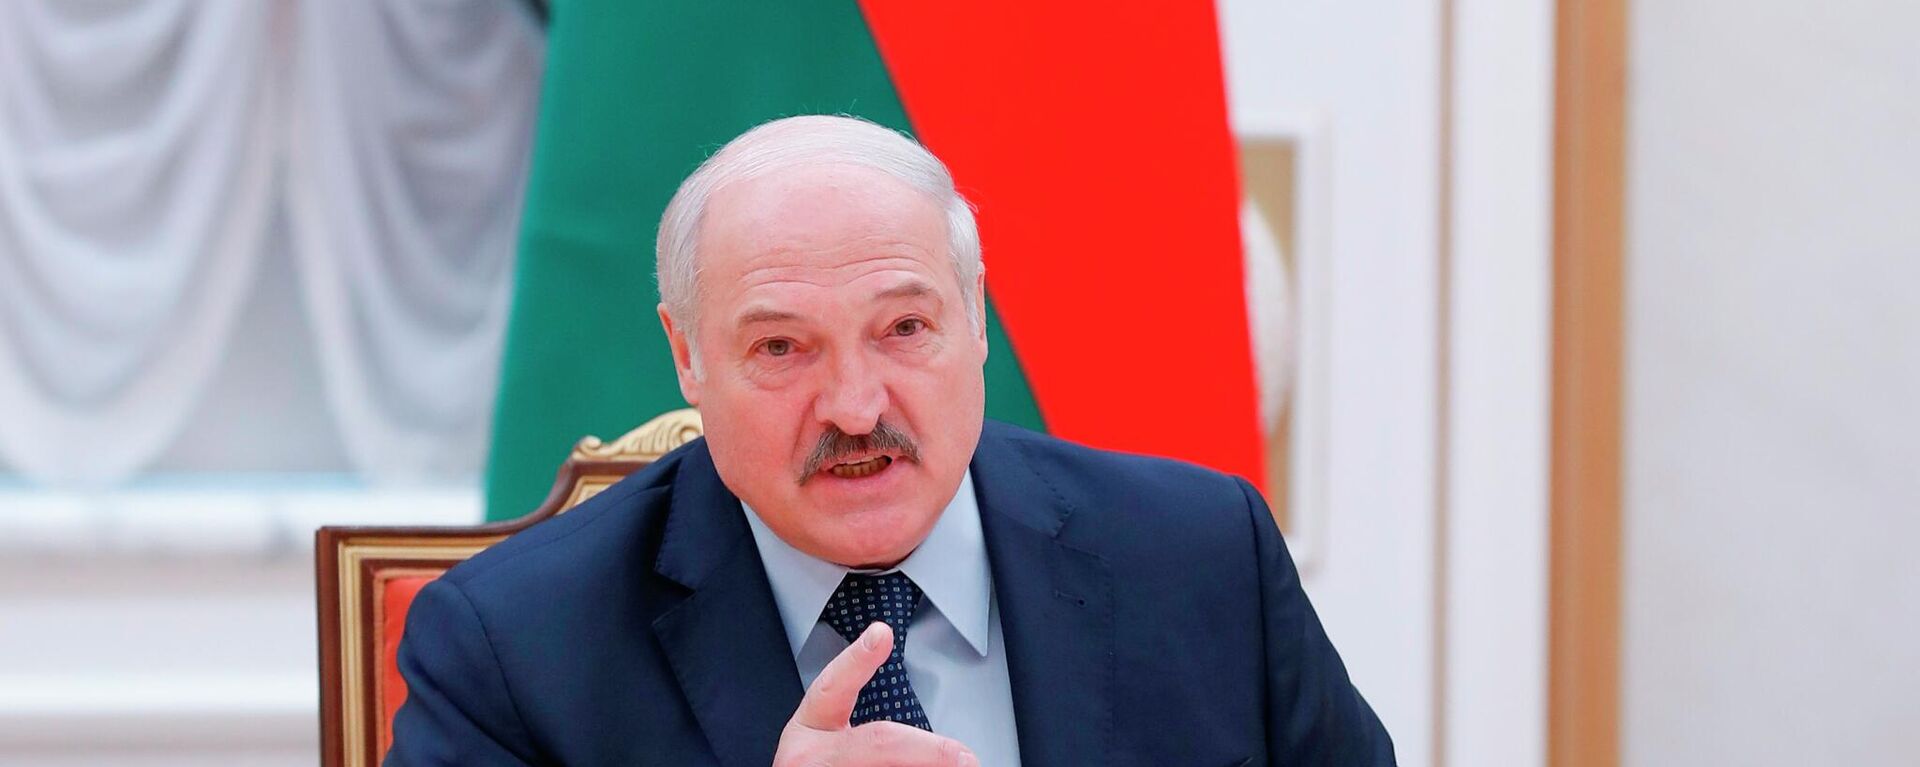 Президент Белоруссии Александр Лукашенко, архивное фото - Sputnik Lietuva, 1920, 21.07.2021